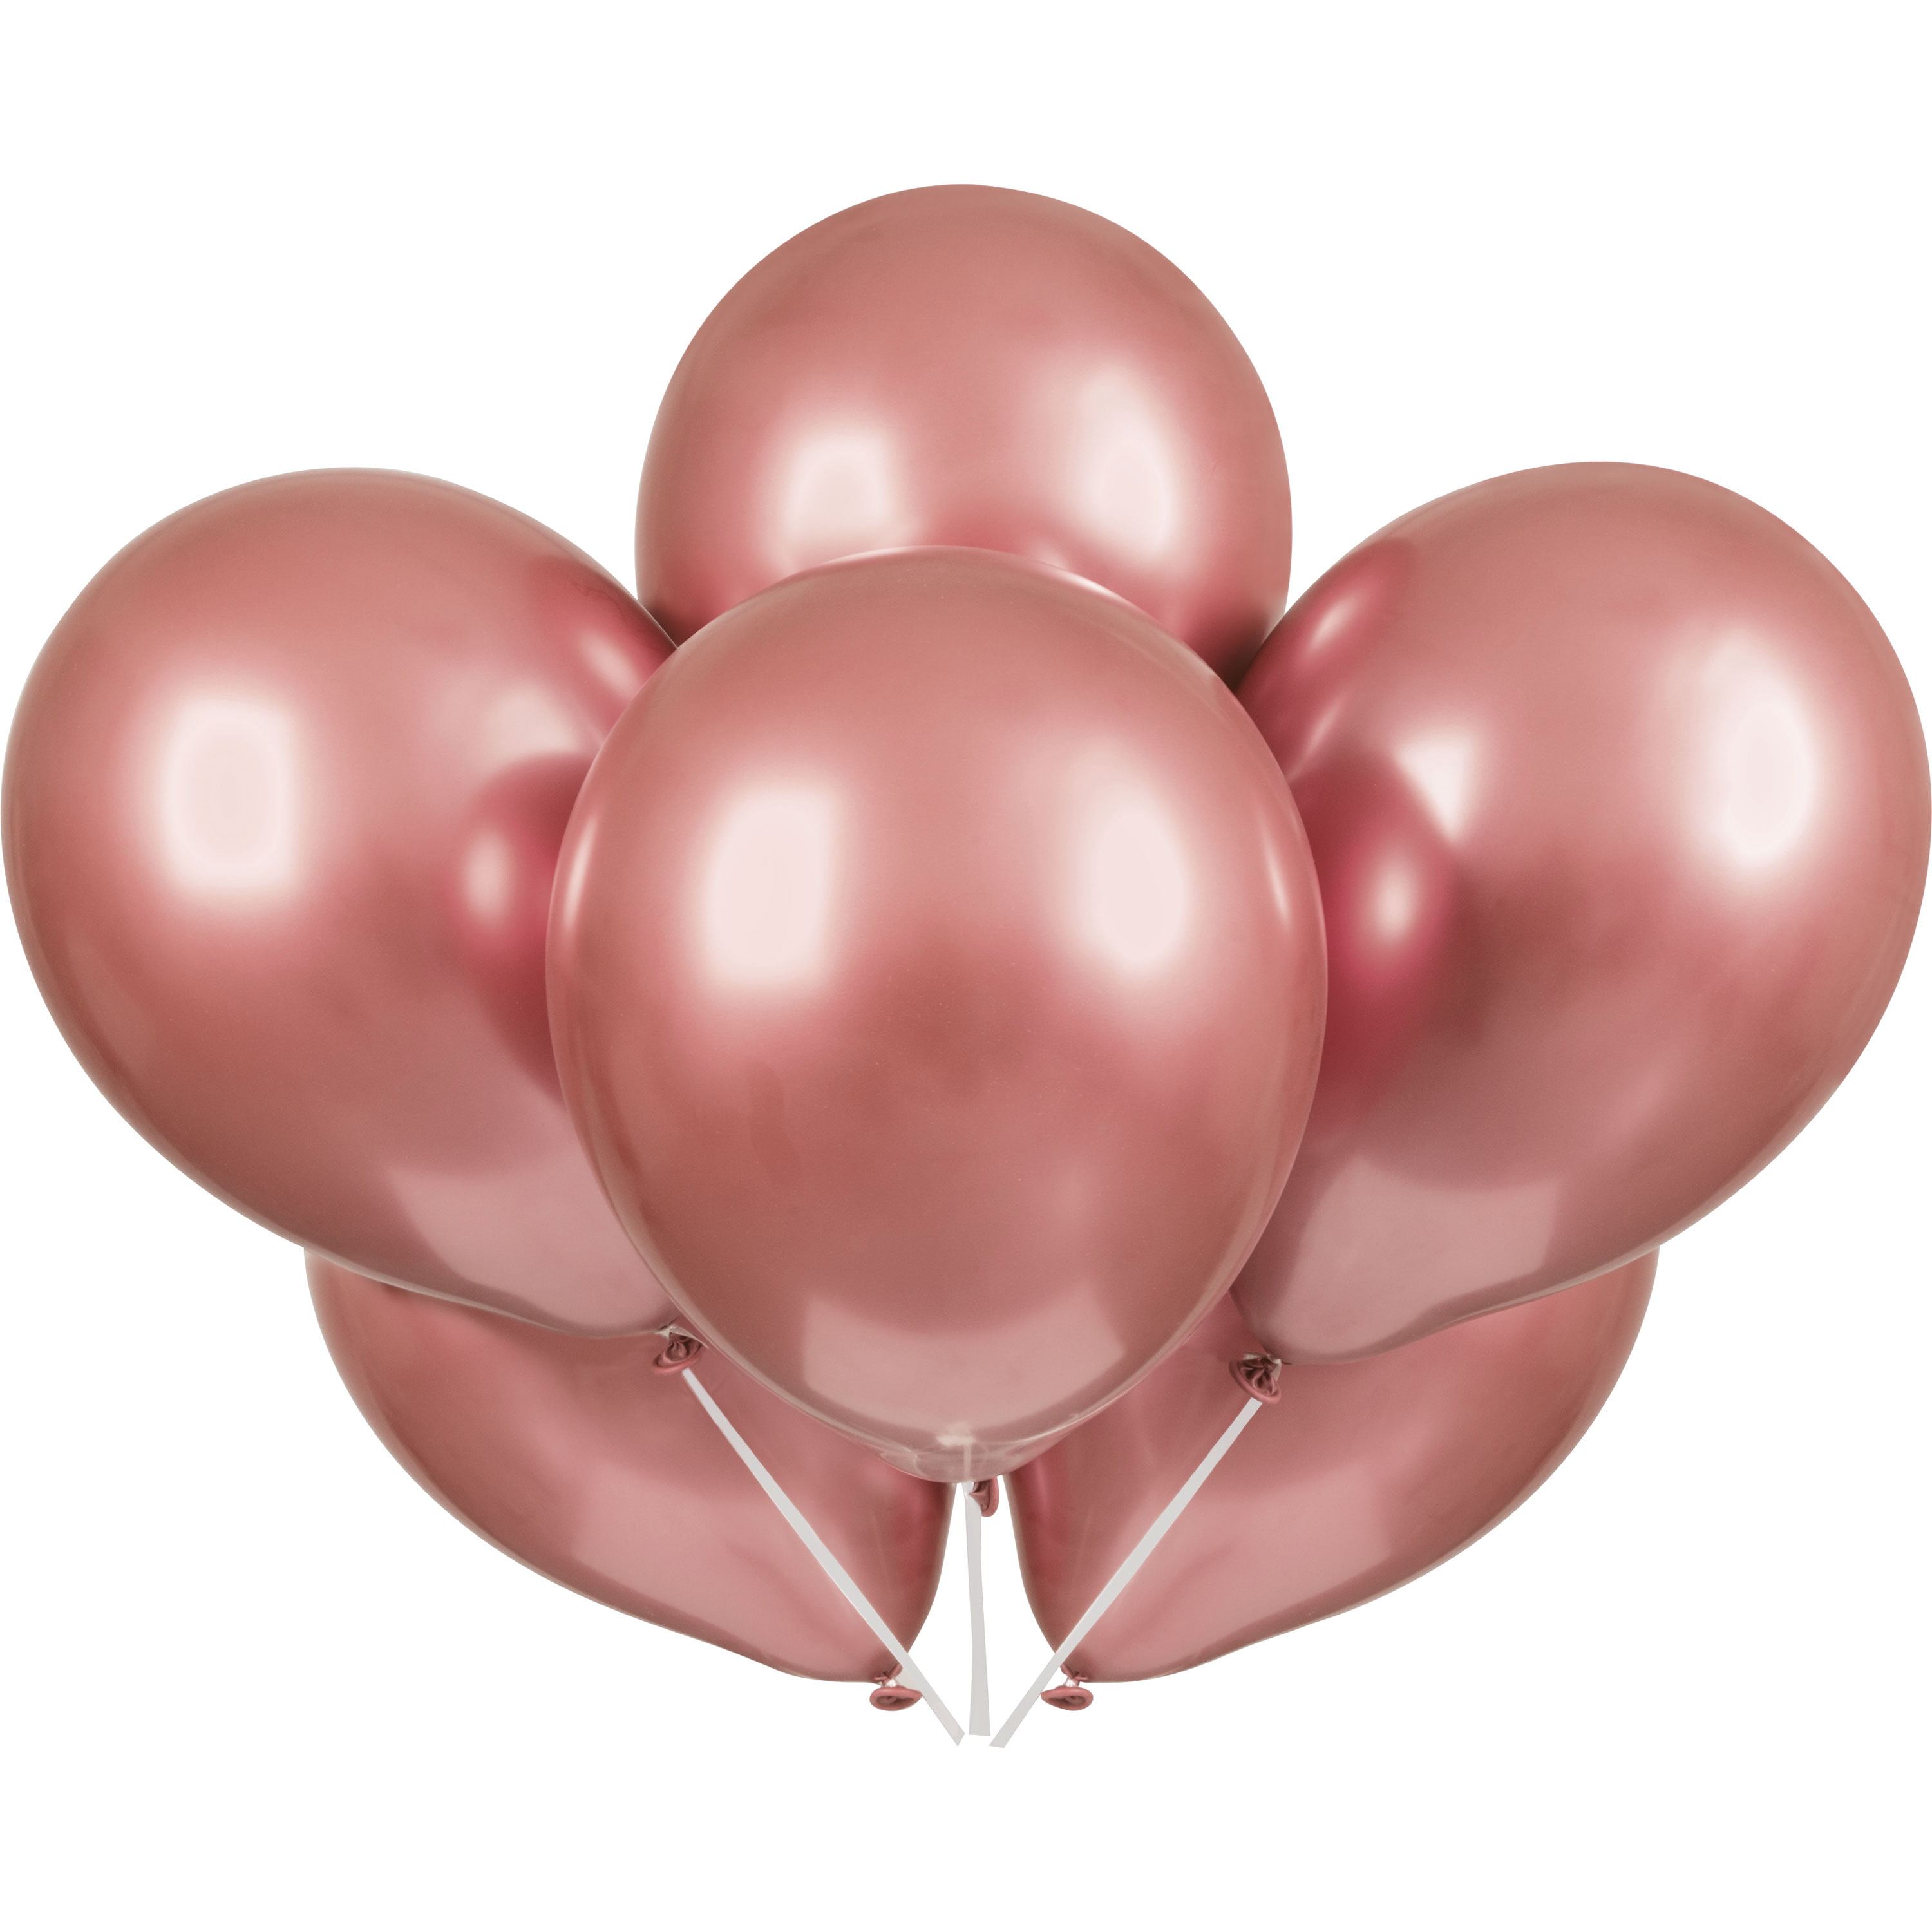 Wedding Rosegold Latex Balloons 100pcs 5inch Metallic Rose Balloons for Birthday Fiesta Party Decoration